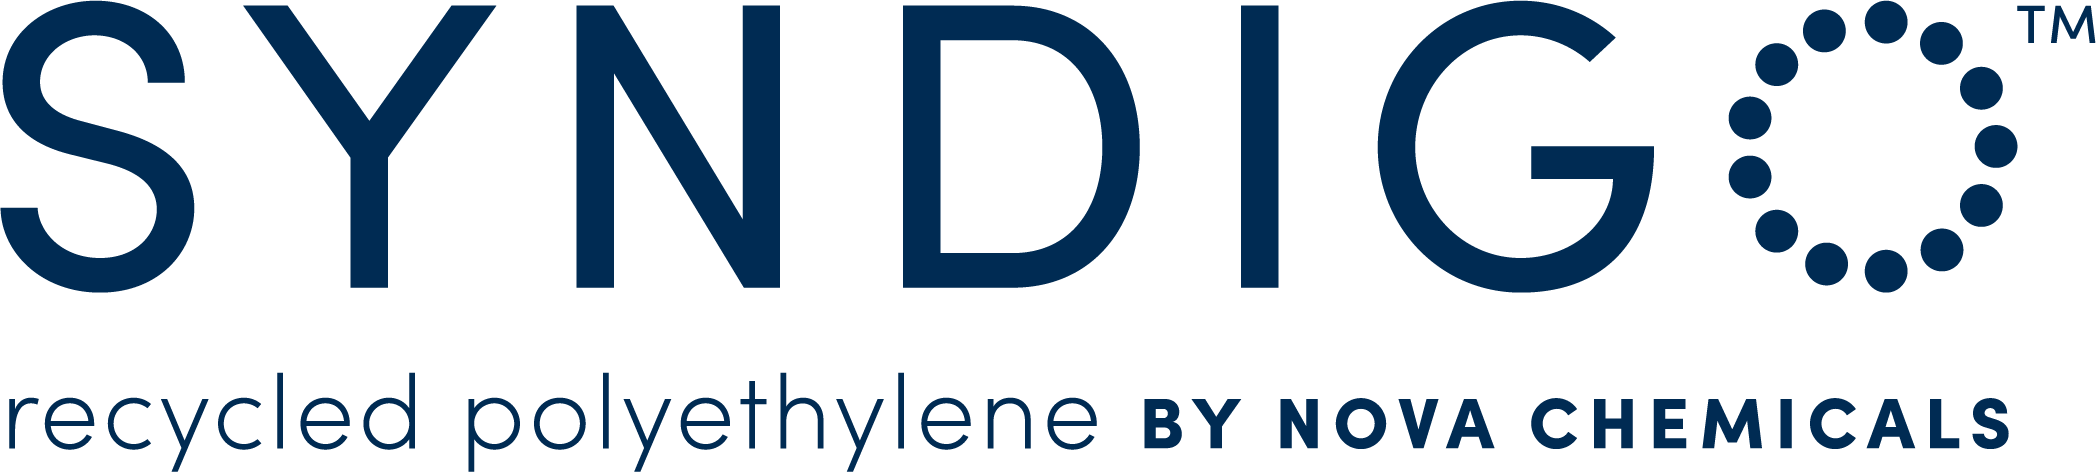 SYNDIGO logo